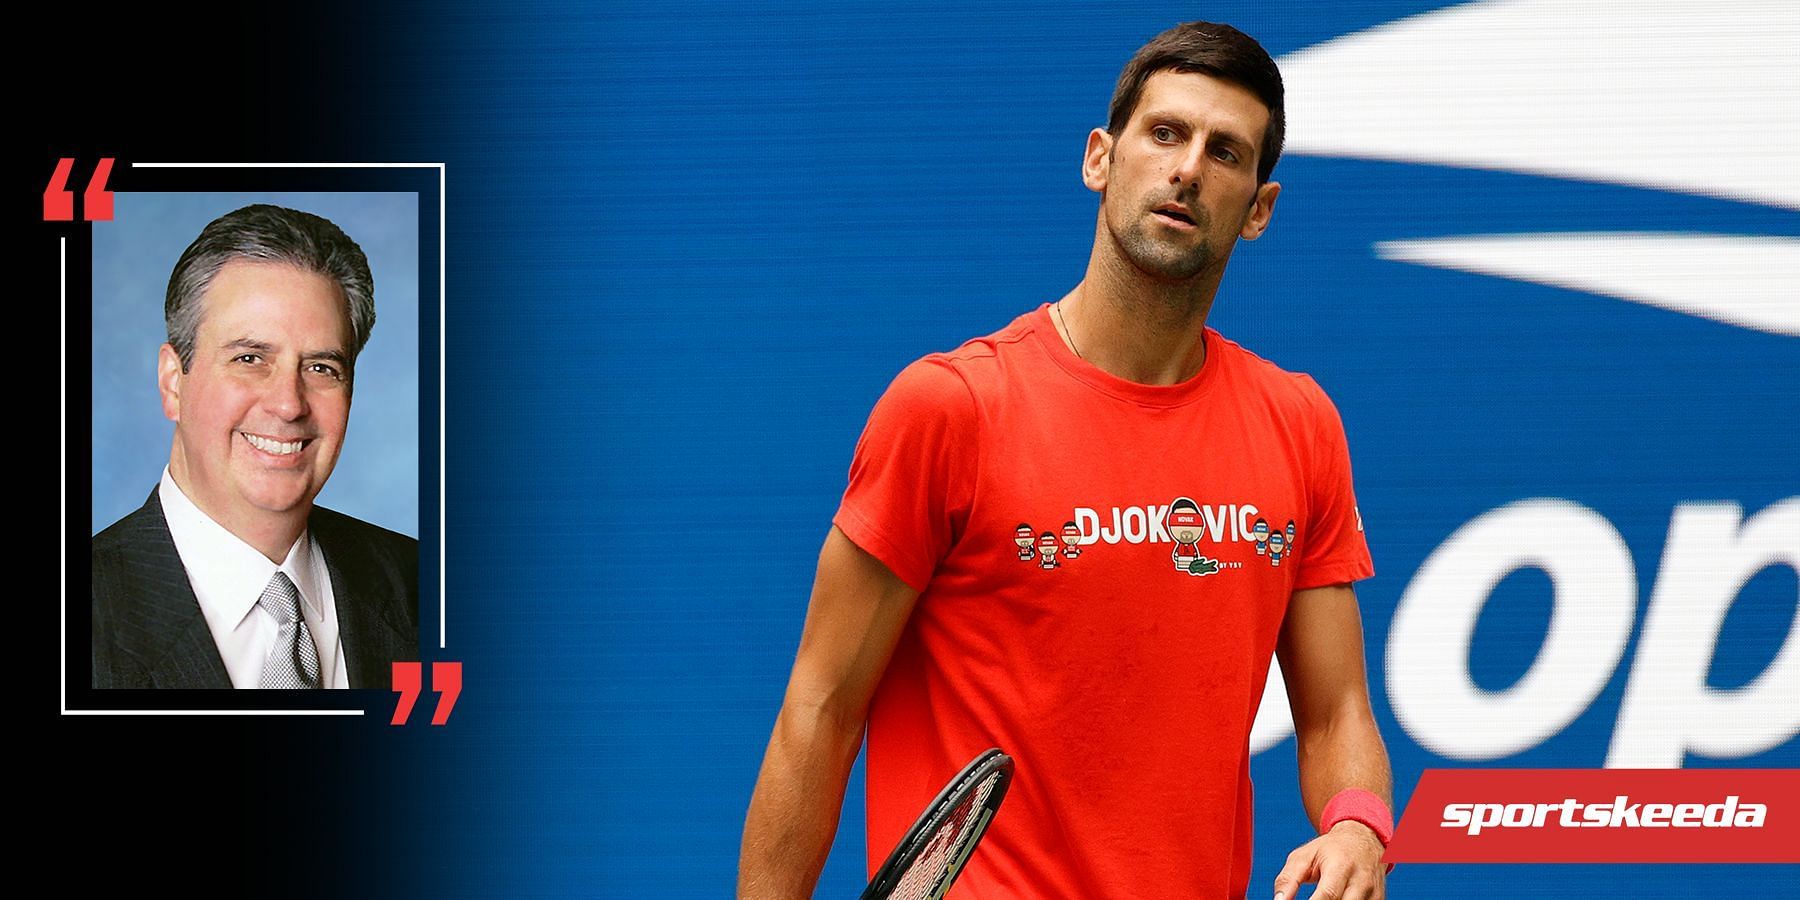 The orthopedic surgeon speaks for Novak Djokovic.